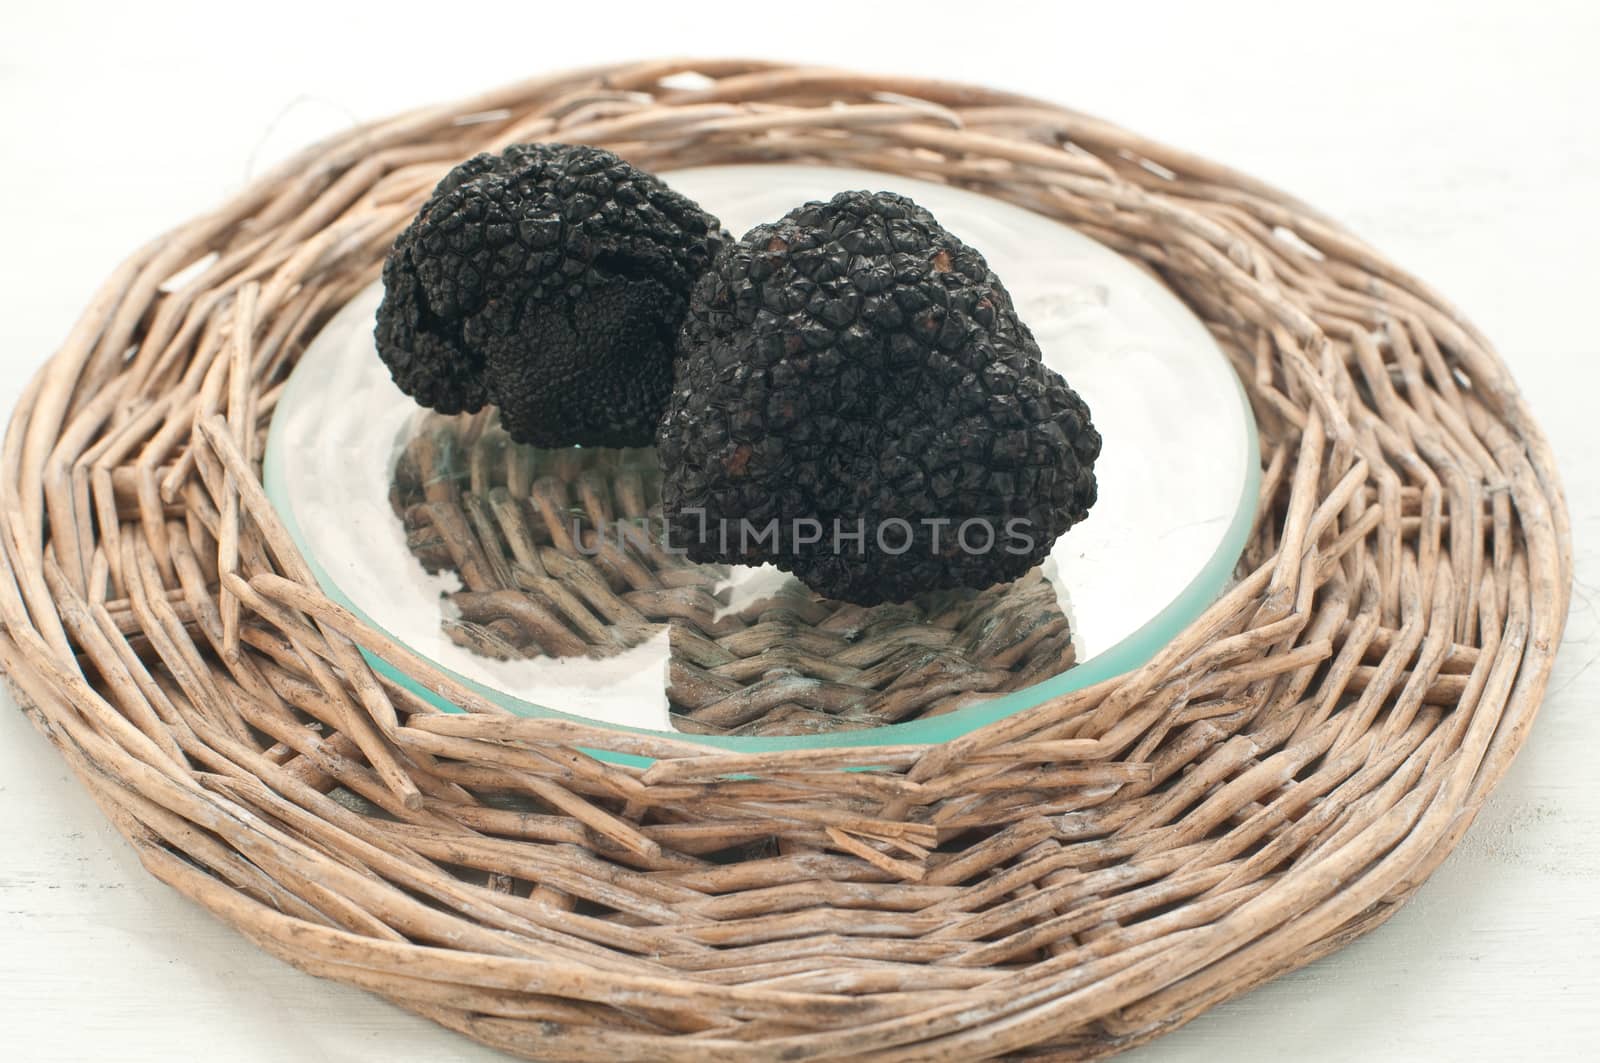 Blacks winter truffles from Umbria called scorzoni, italy